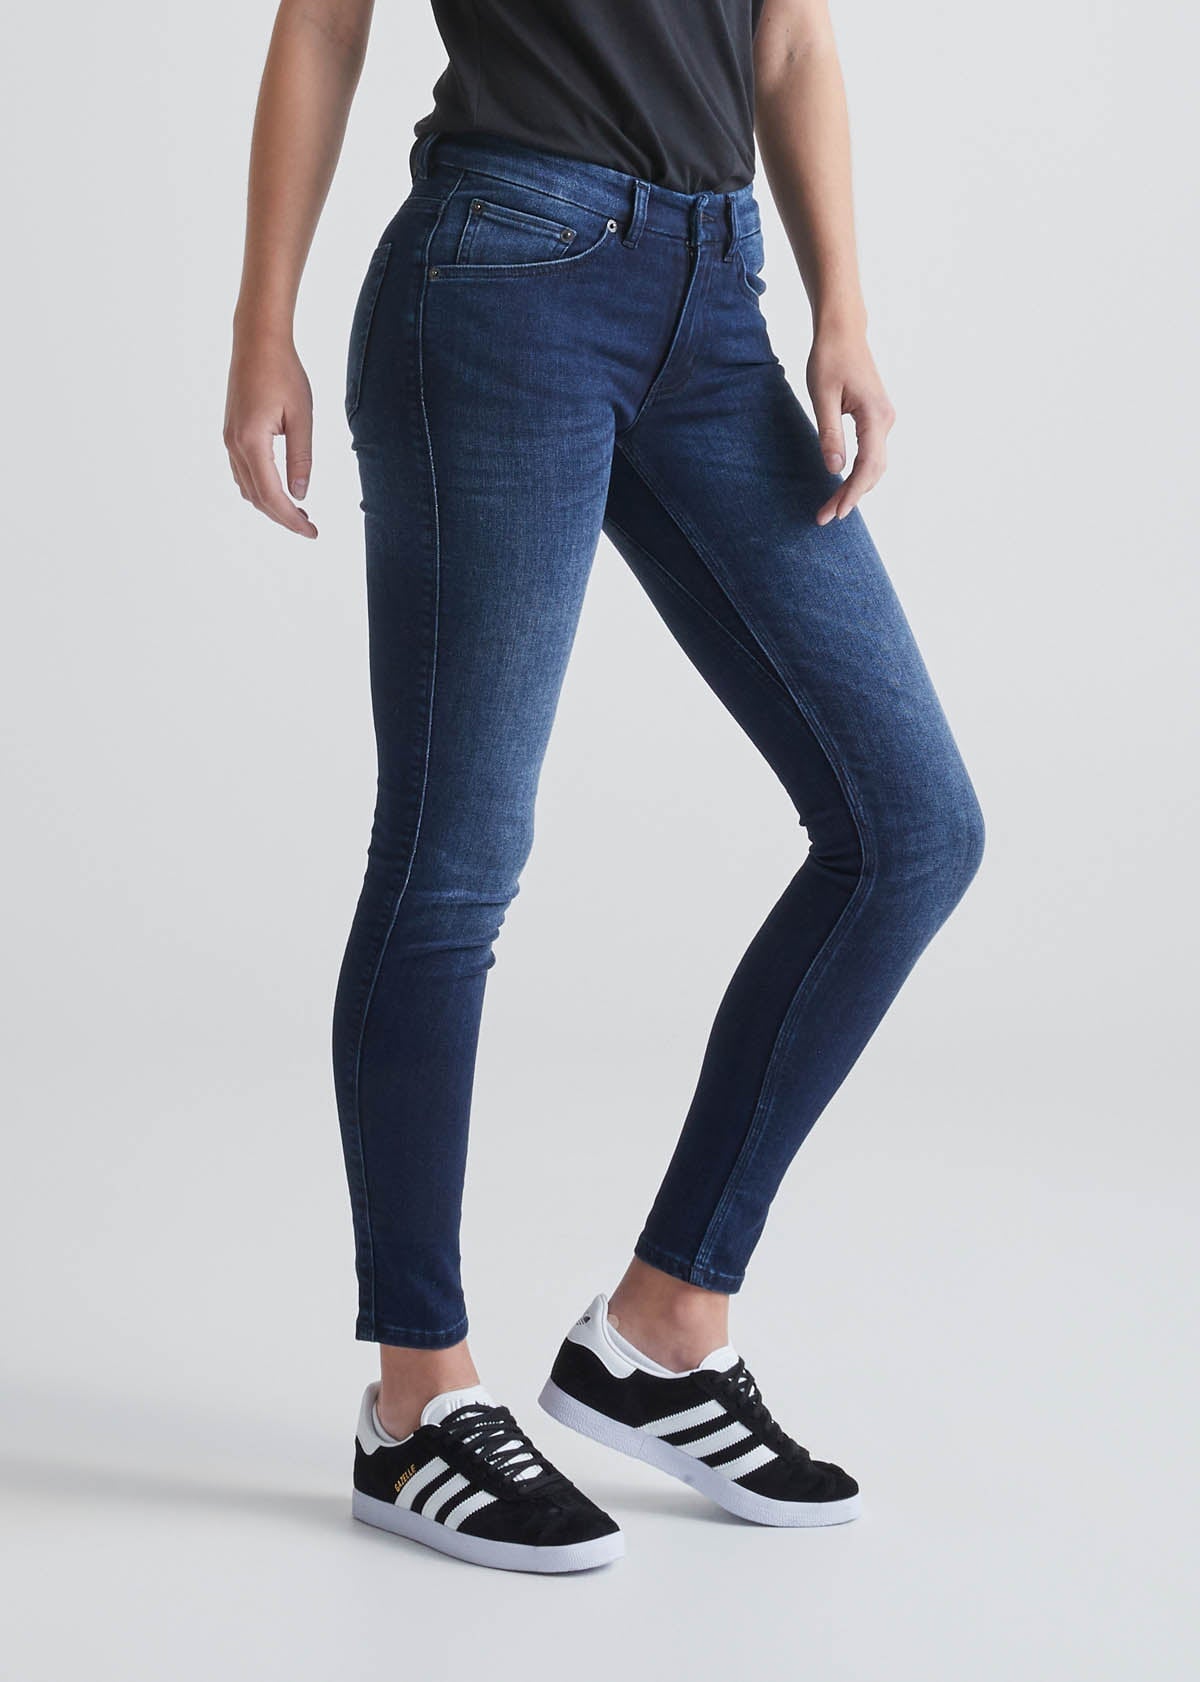 Lexi Women's Super Comfy Stretch Denim Skinny Jeans, Xps26122sk